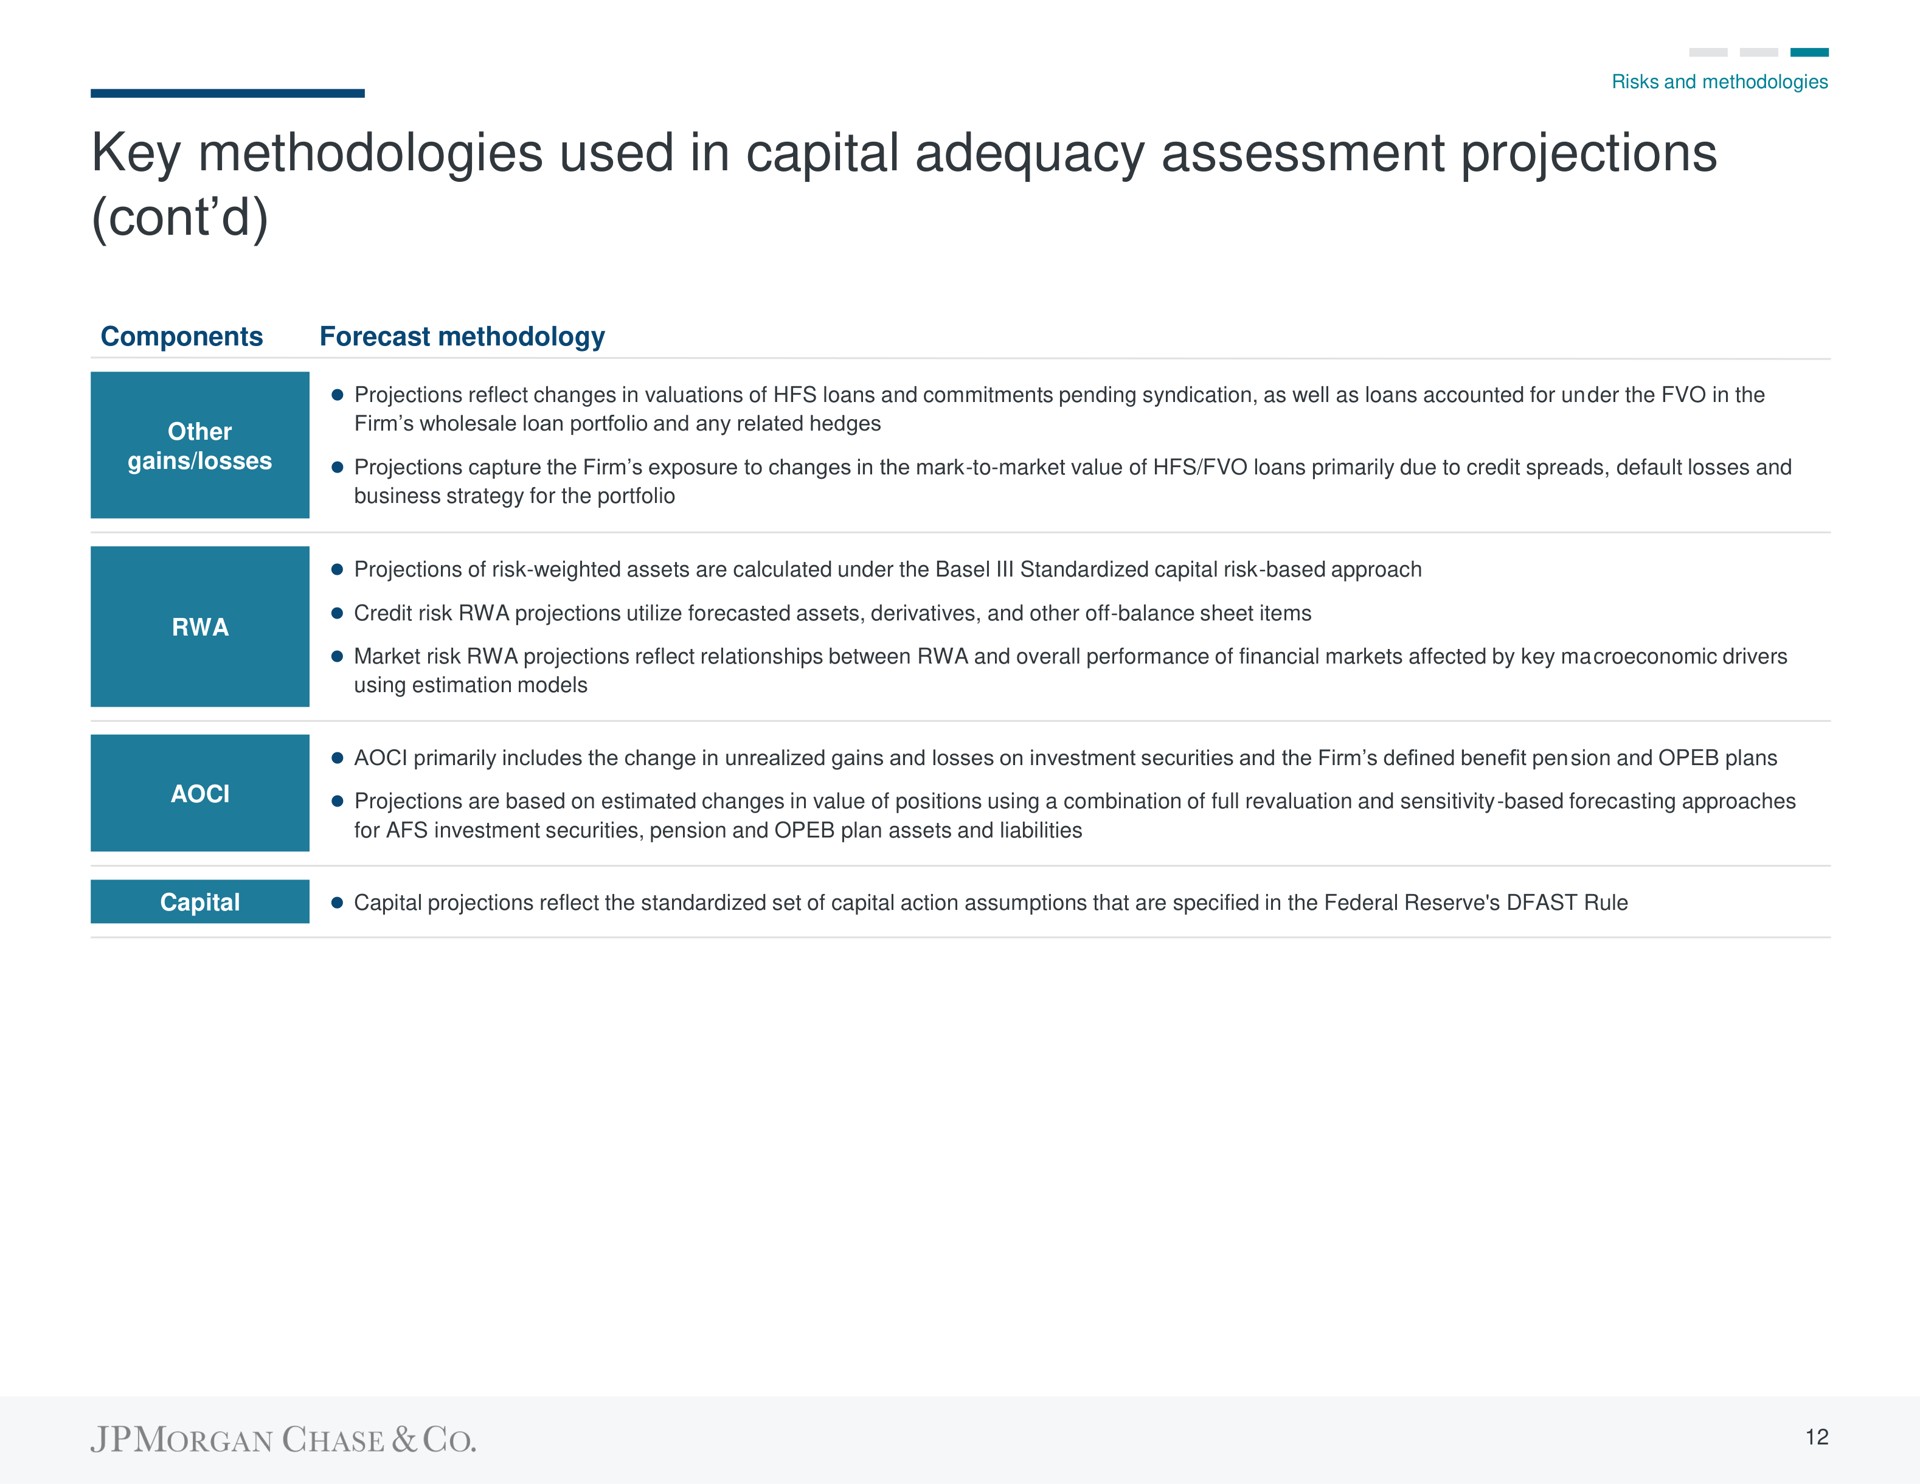 key methodologies used in capital adequacy assessment projections | J.P.Morgan